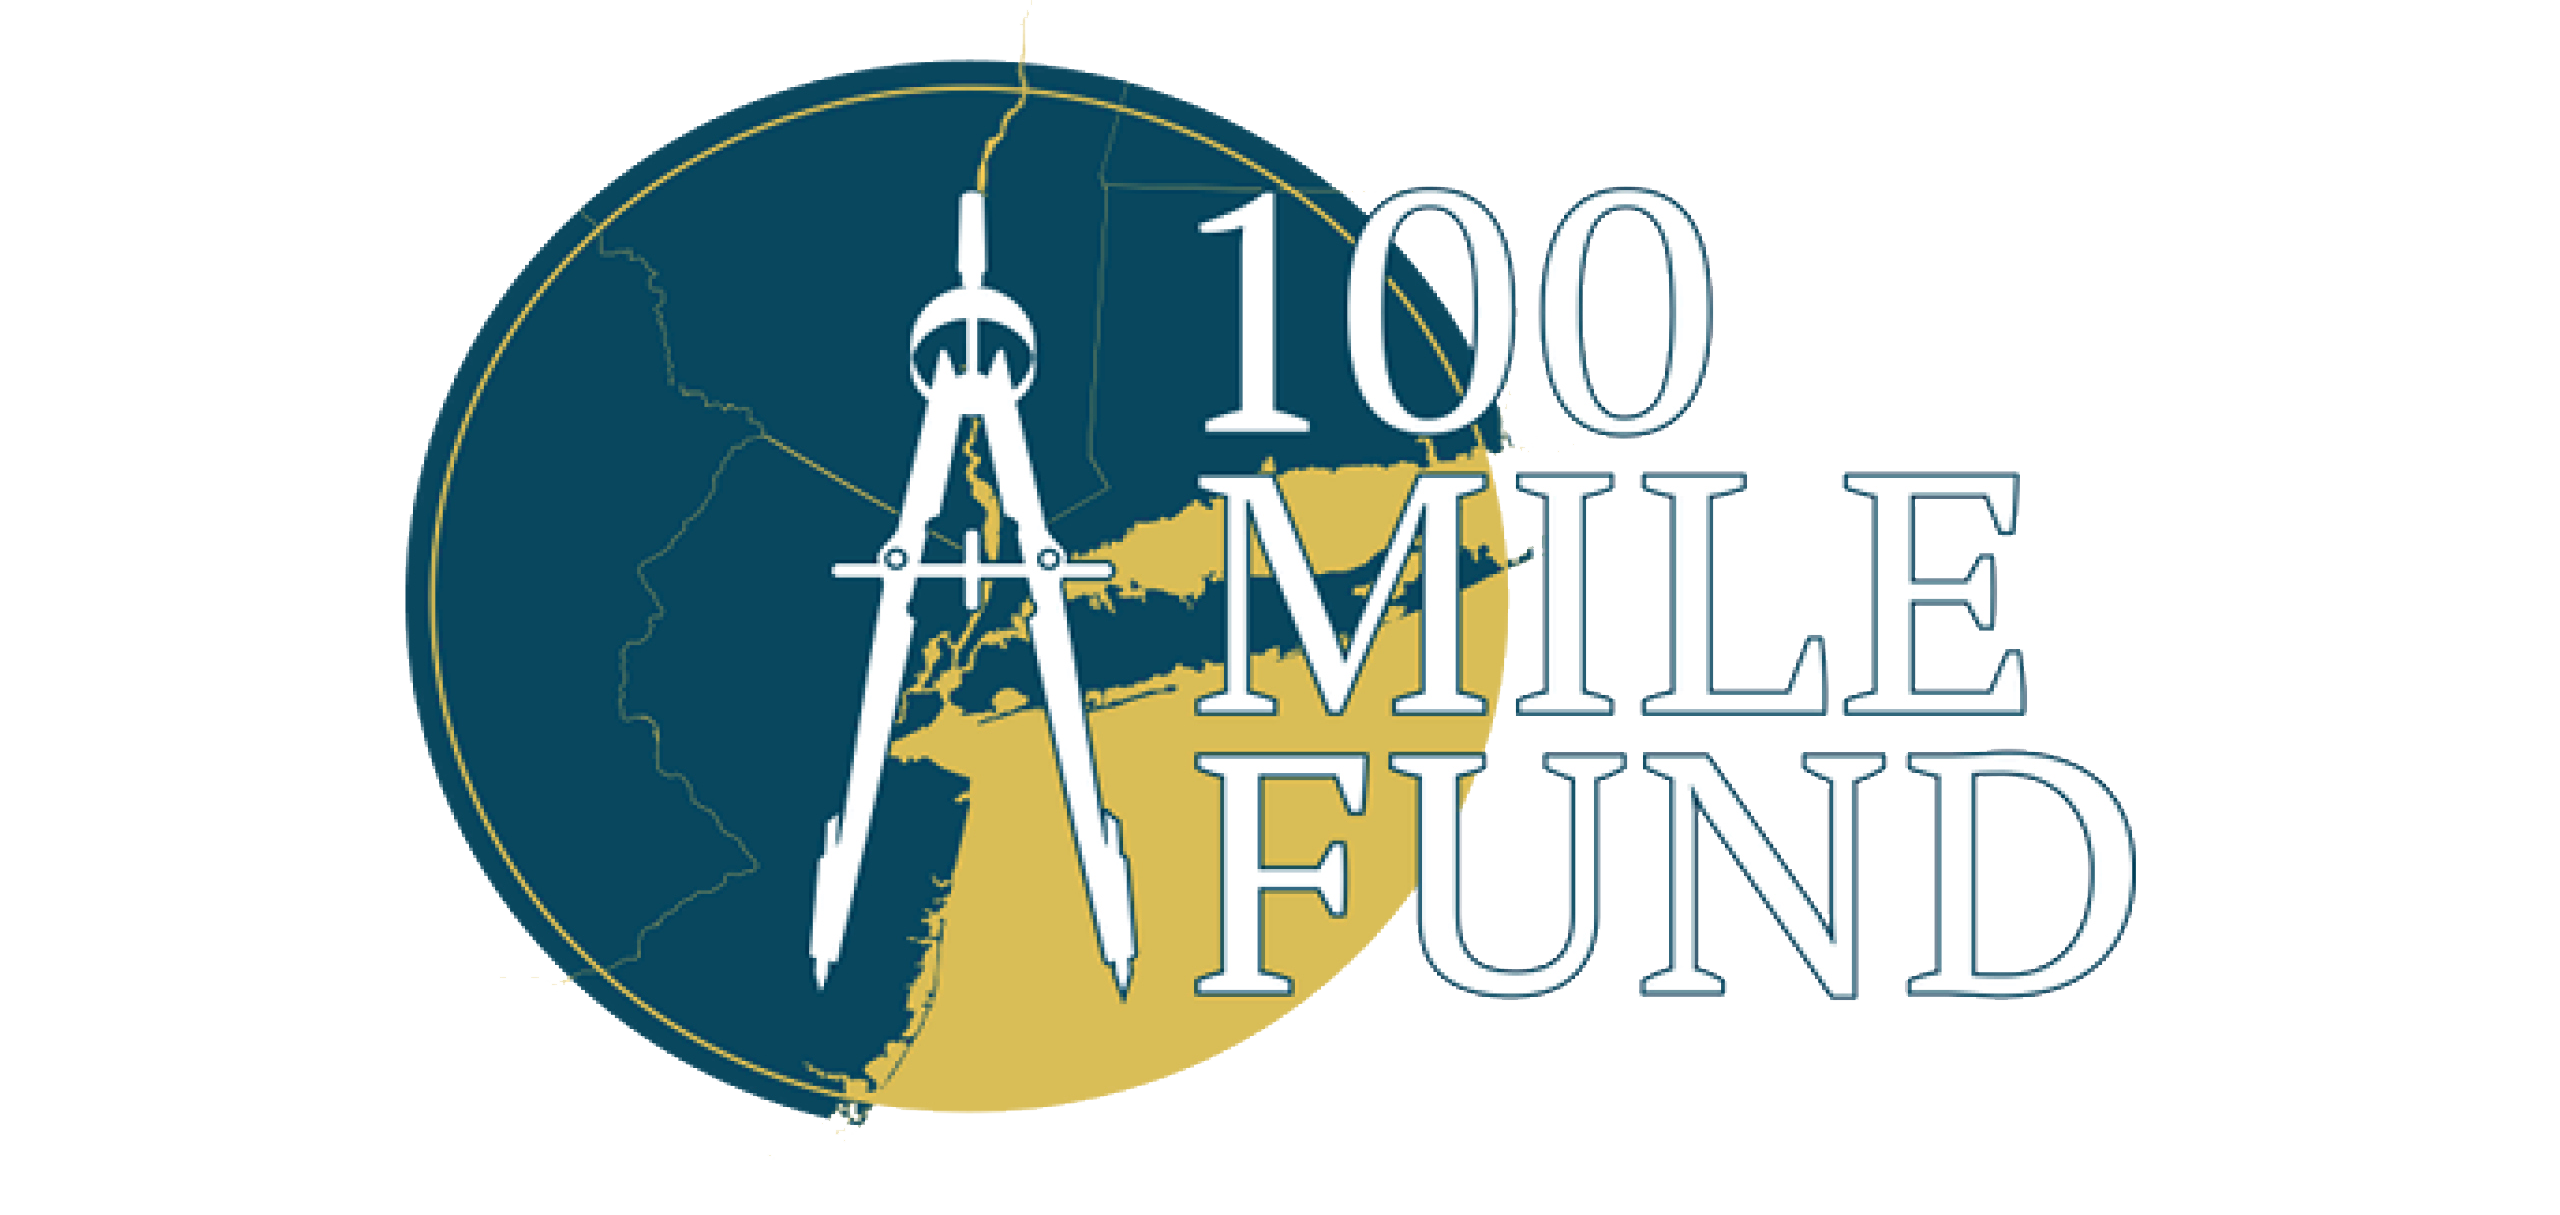 The 100 Mile Fund